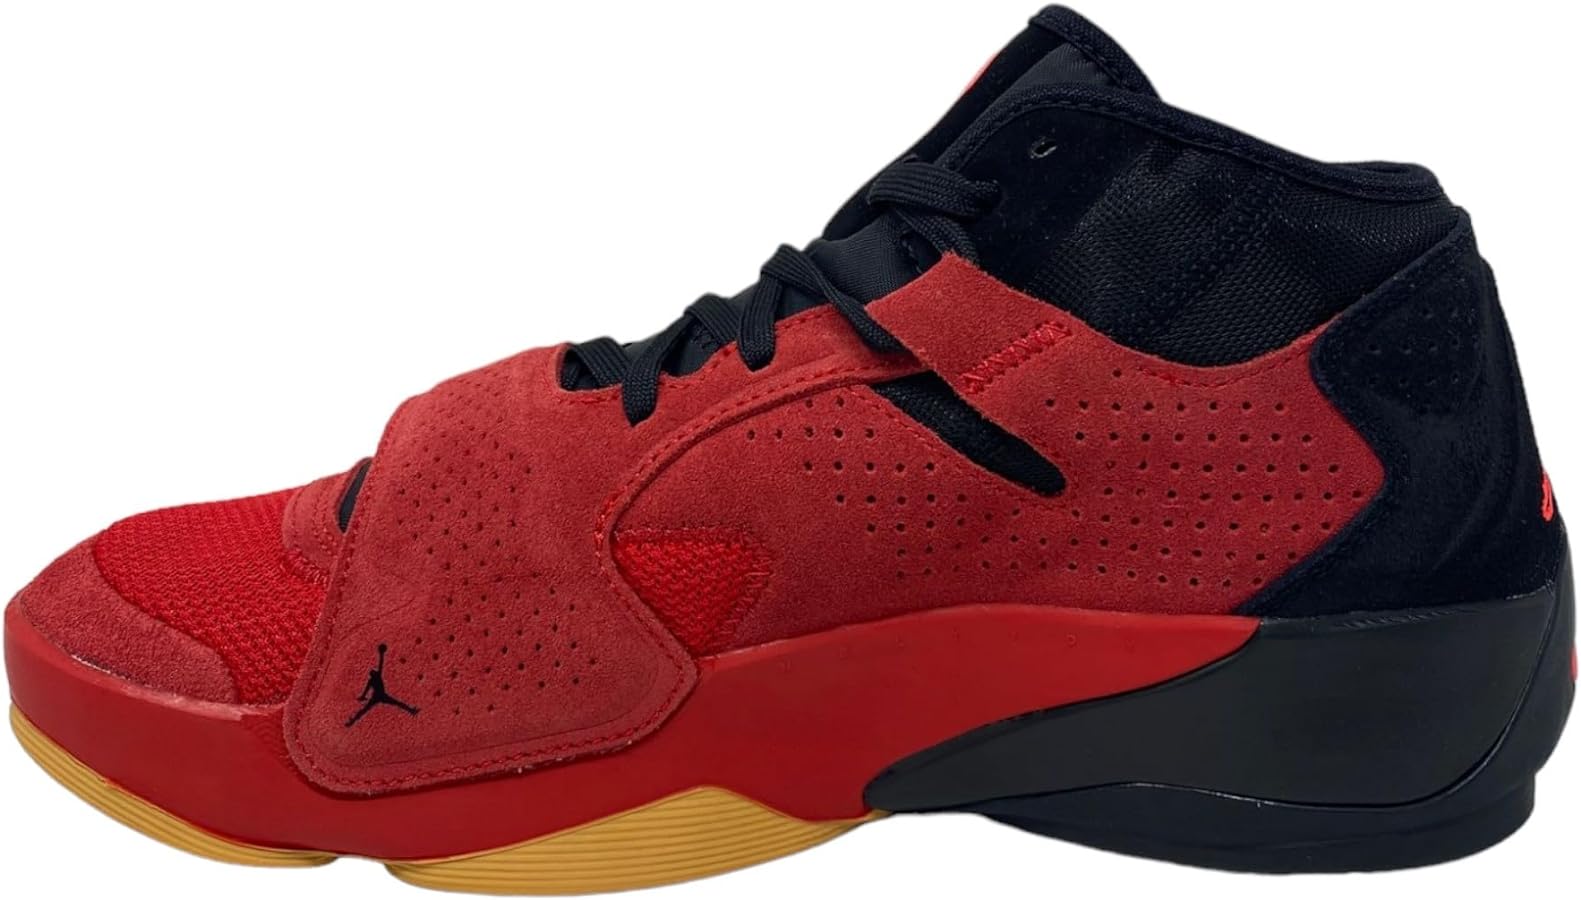 Jordan Zion 2 Men’s Basketball Shoes Review